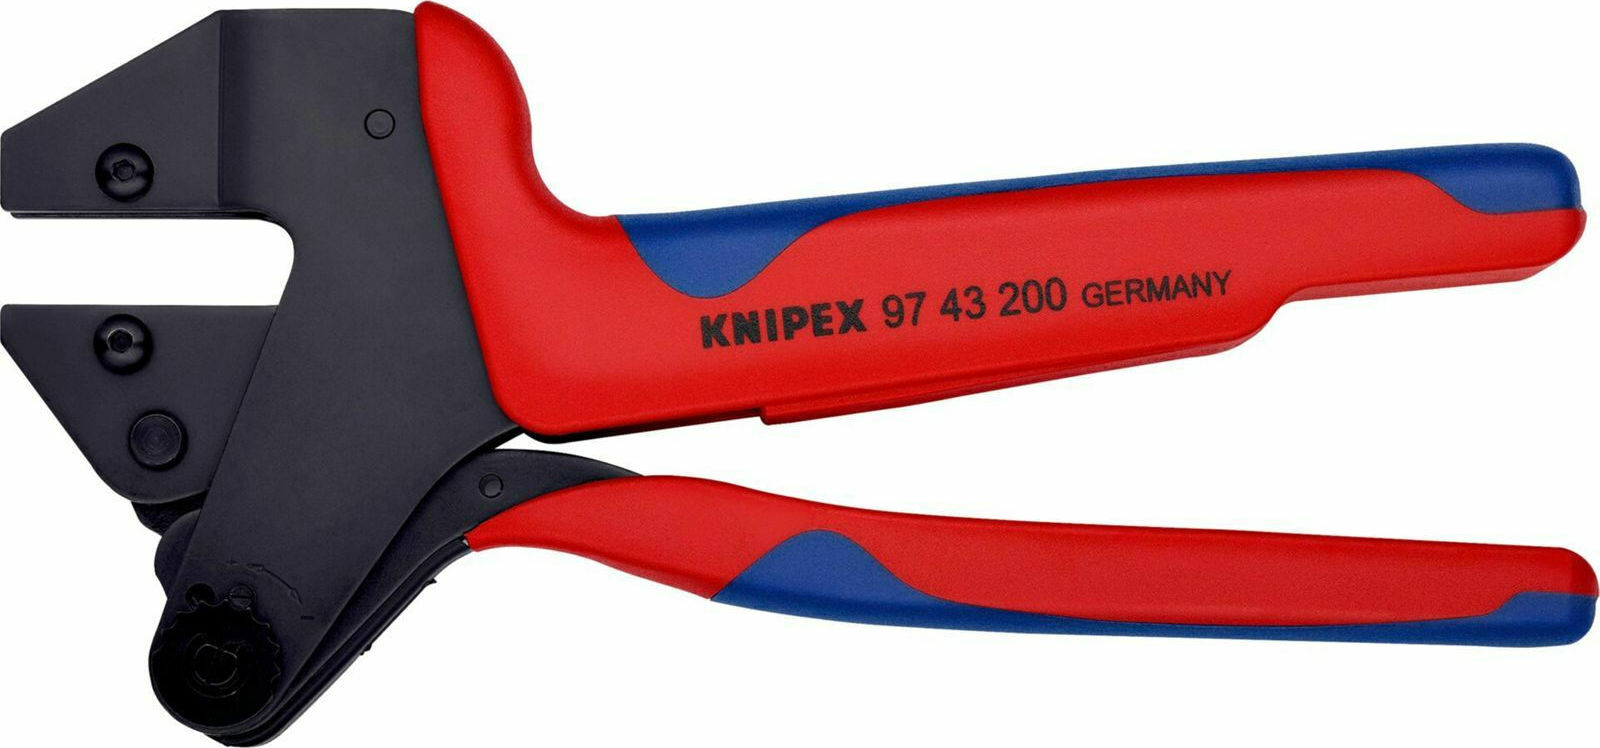 Knipex Πρέσα Ακροδεκτών (Μήκος 200mm) 9743200 | Skroutz.gr